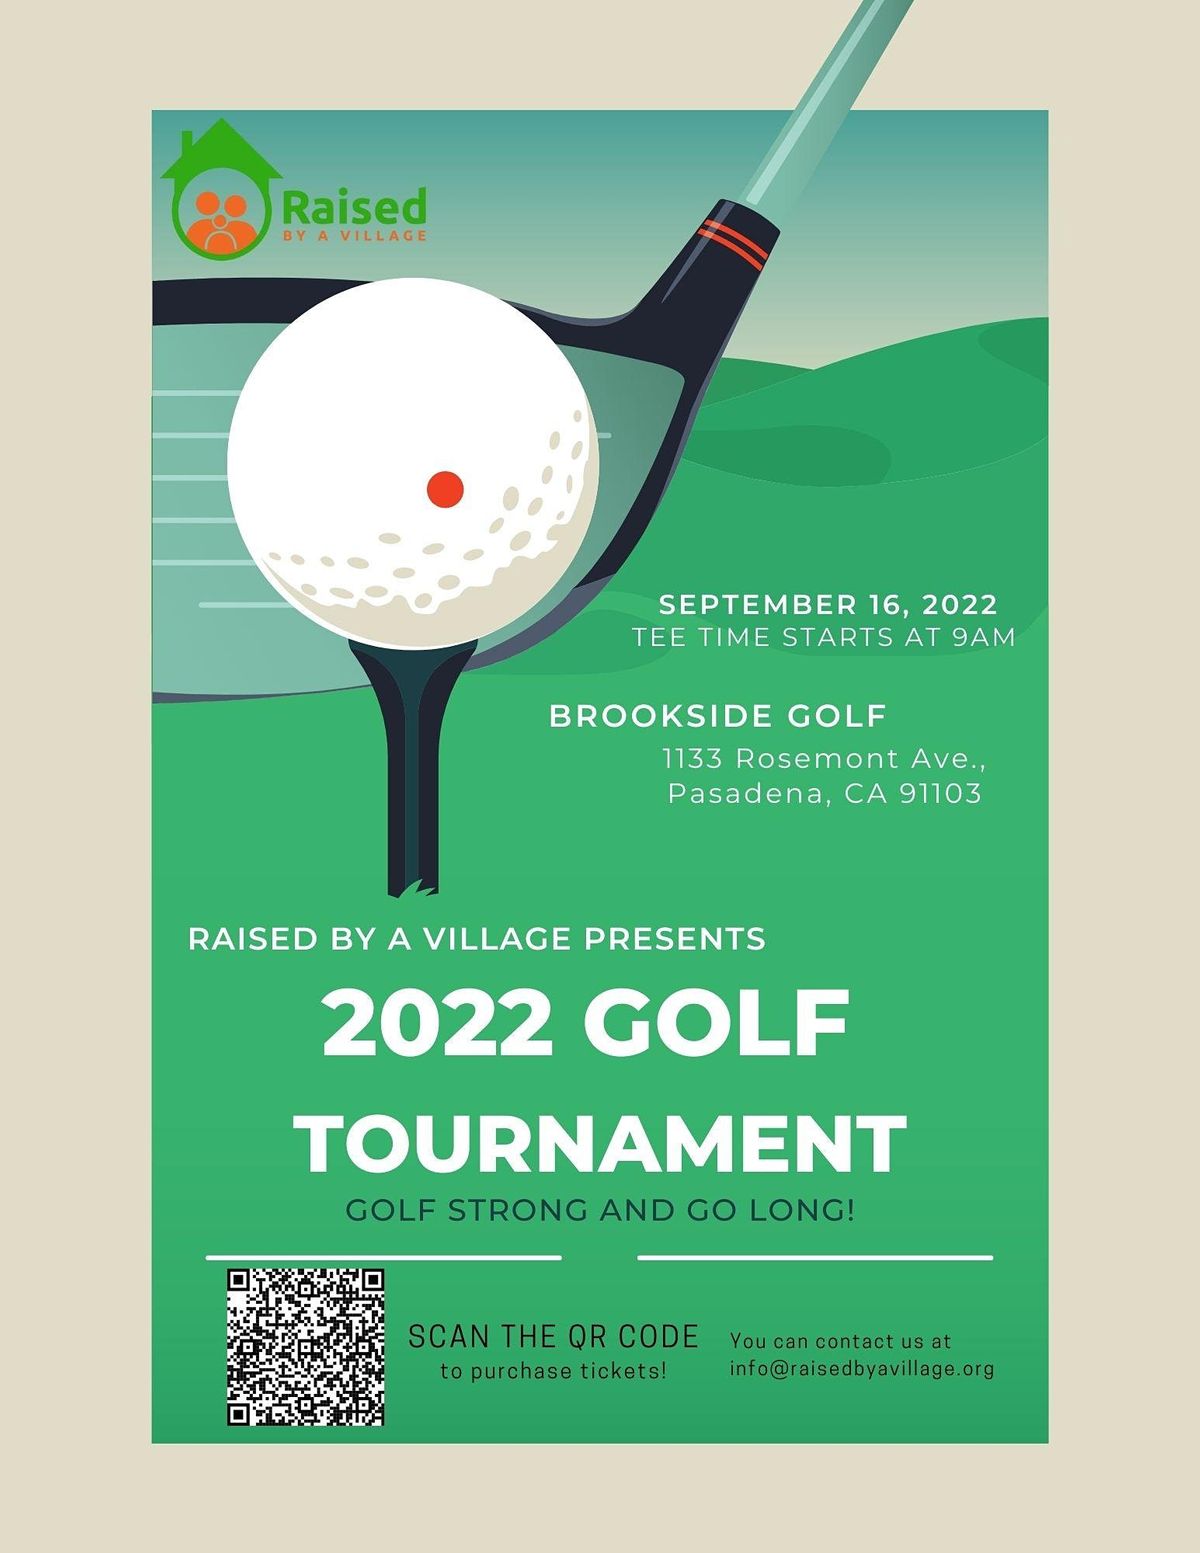 2022-golf-tournament-brookside-golf-club-pasadena-16-september-2022